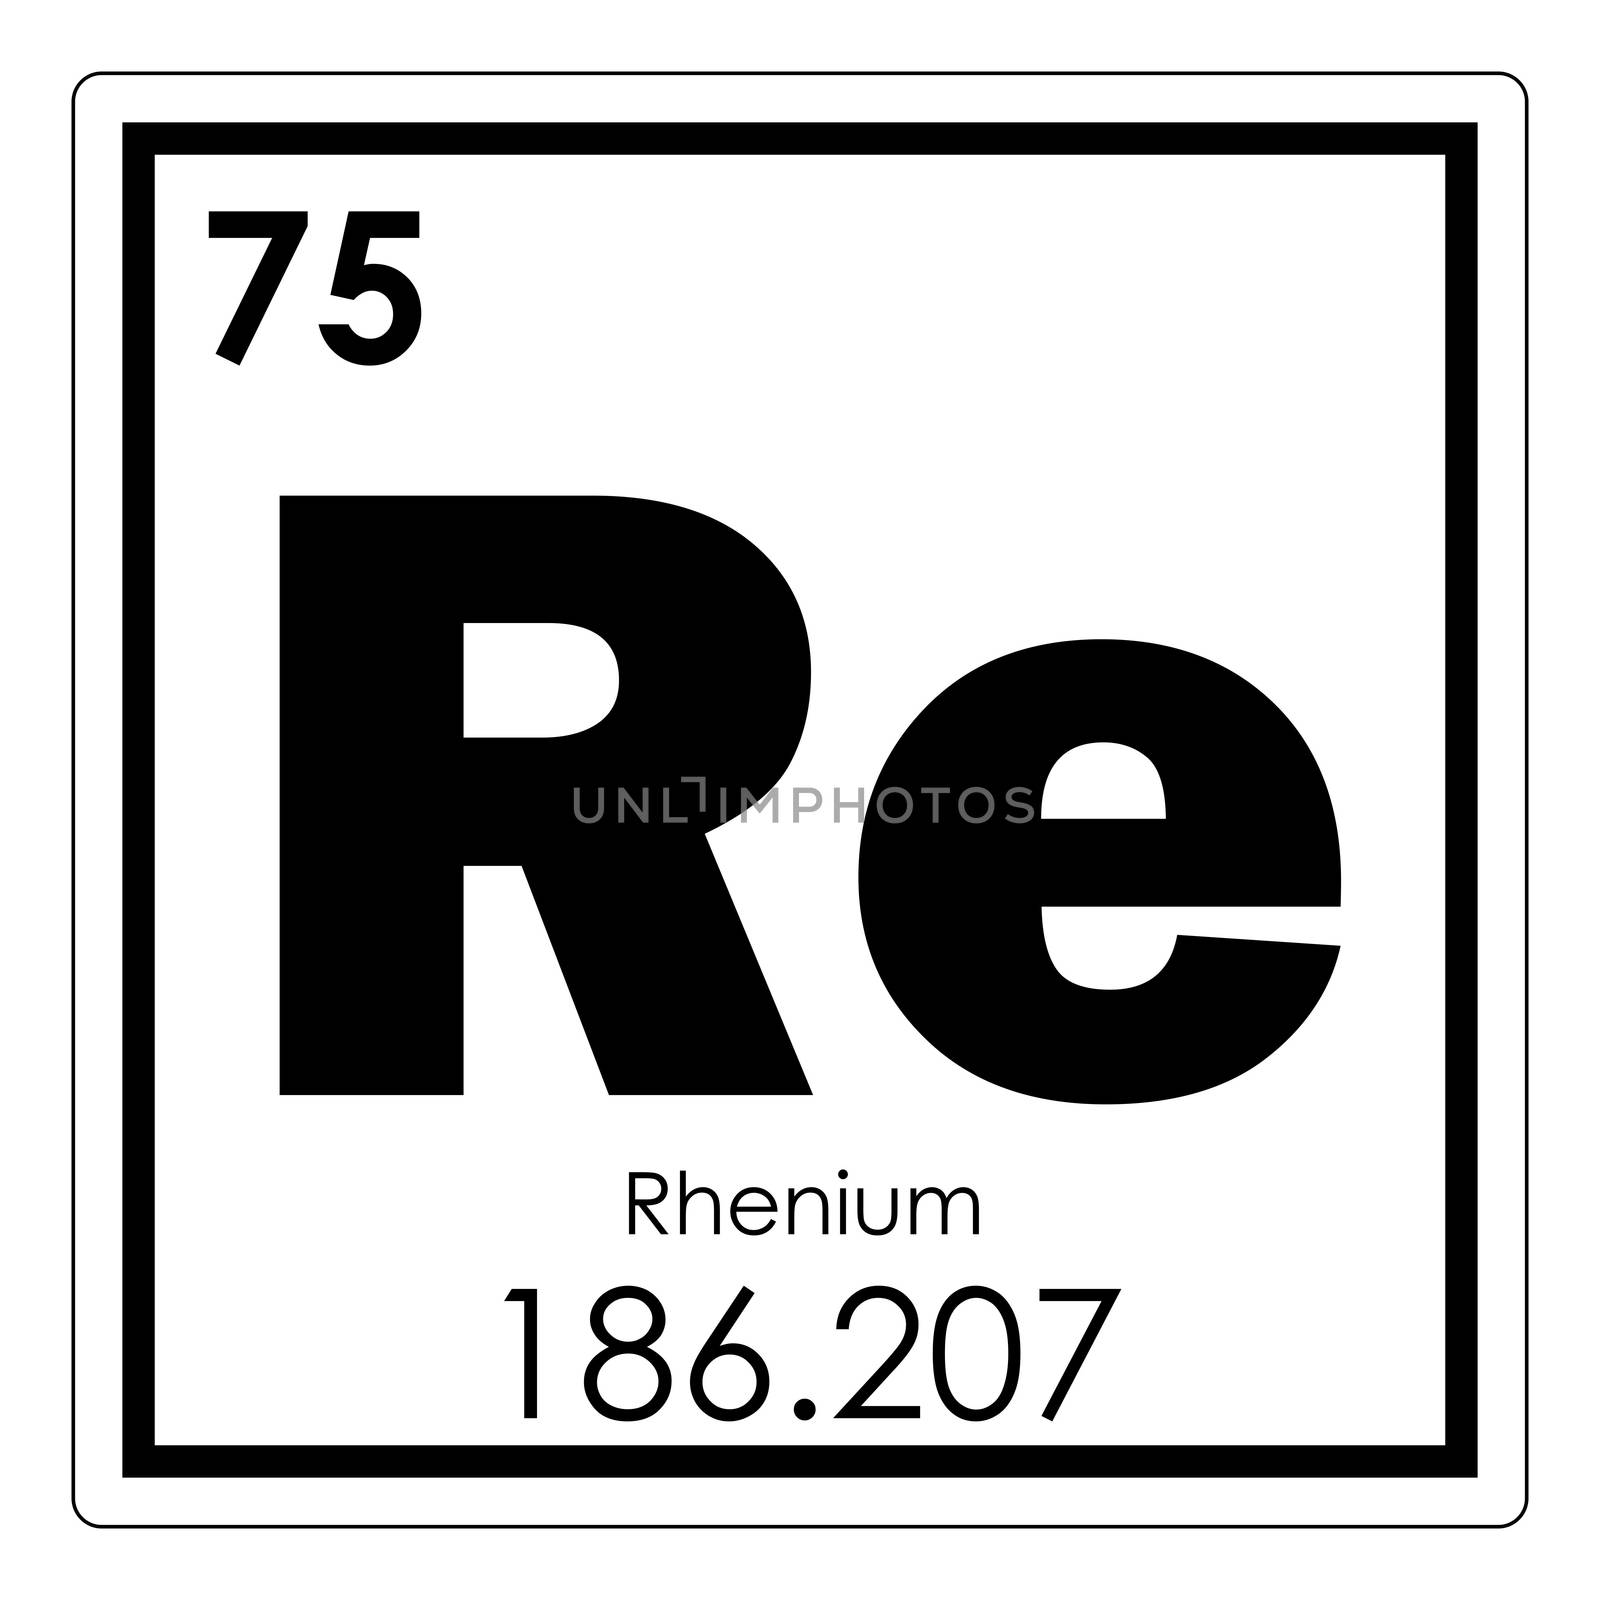 Rhenium chemical element by tony4urban